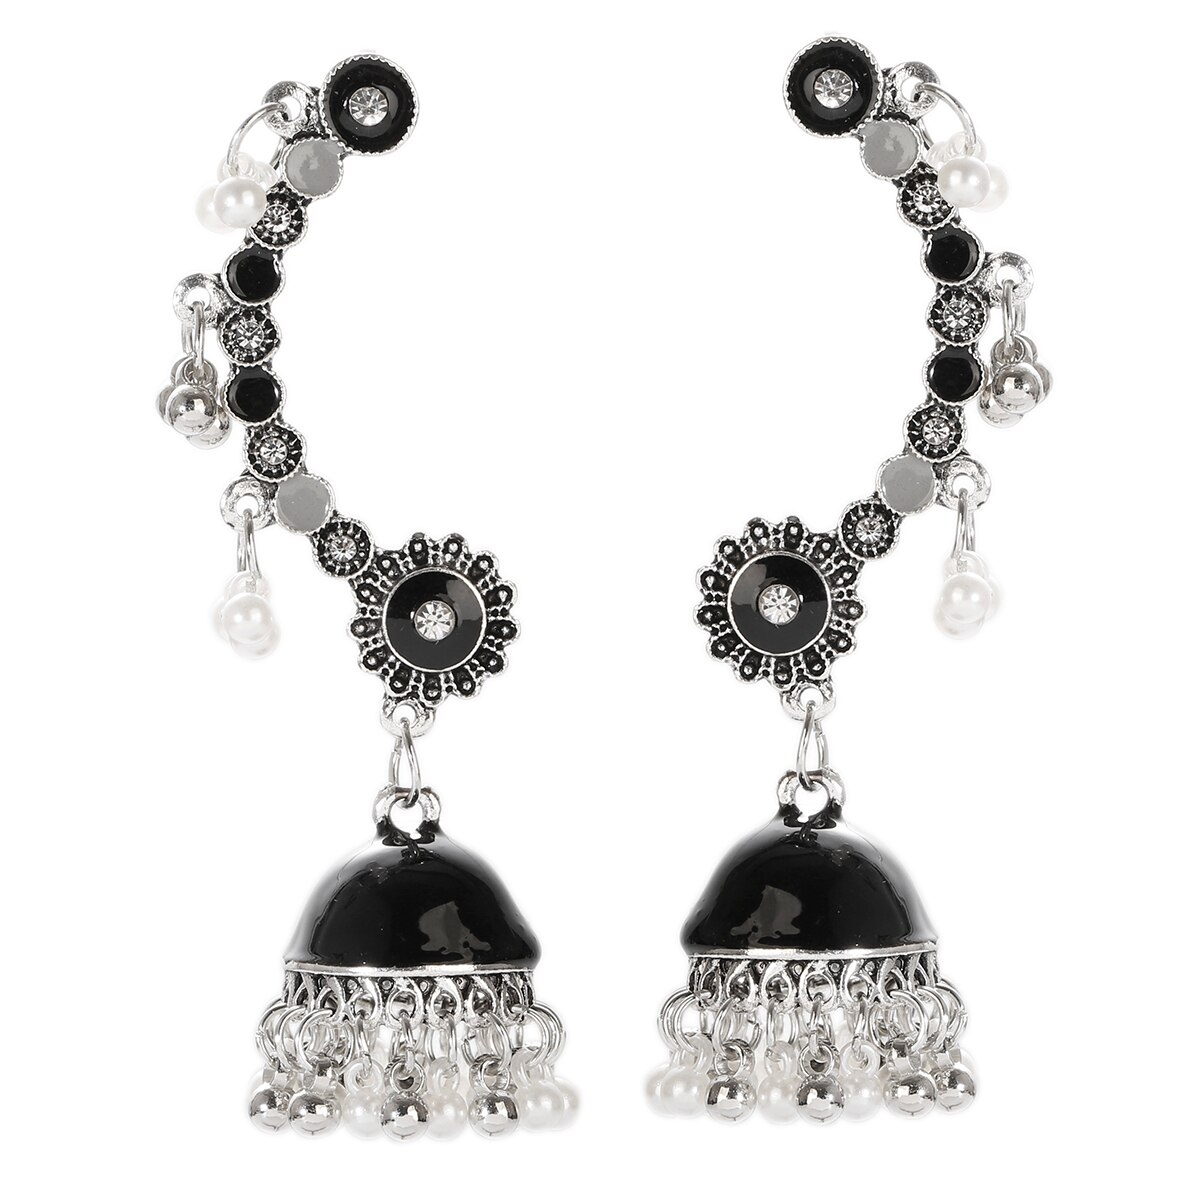 Vintage-Black-Dripping-Oil-Indian-Earring-For-Women-Pendient-Ethnic-Flower-Earring-Tibetan-Jewelry-B-1005004041465466-4